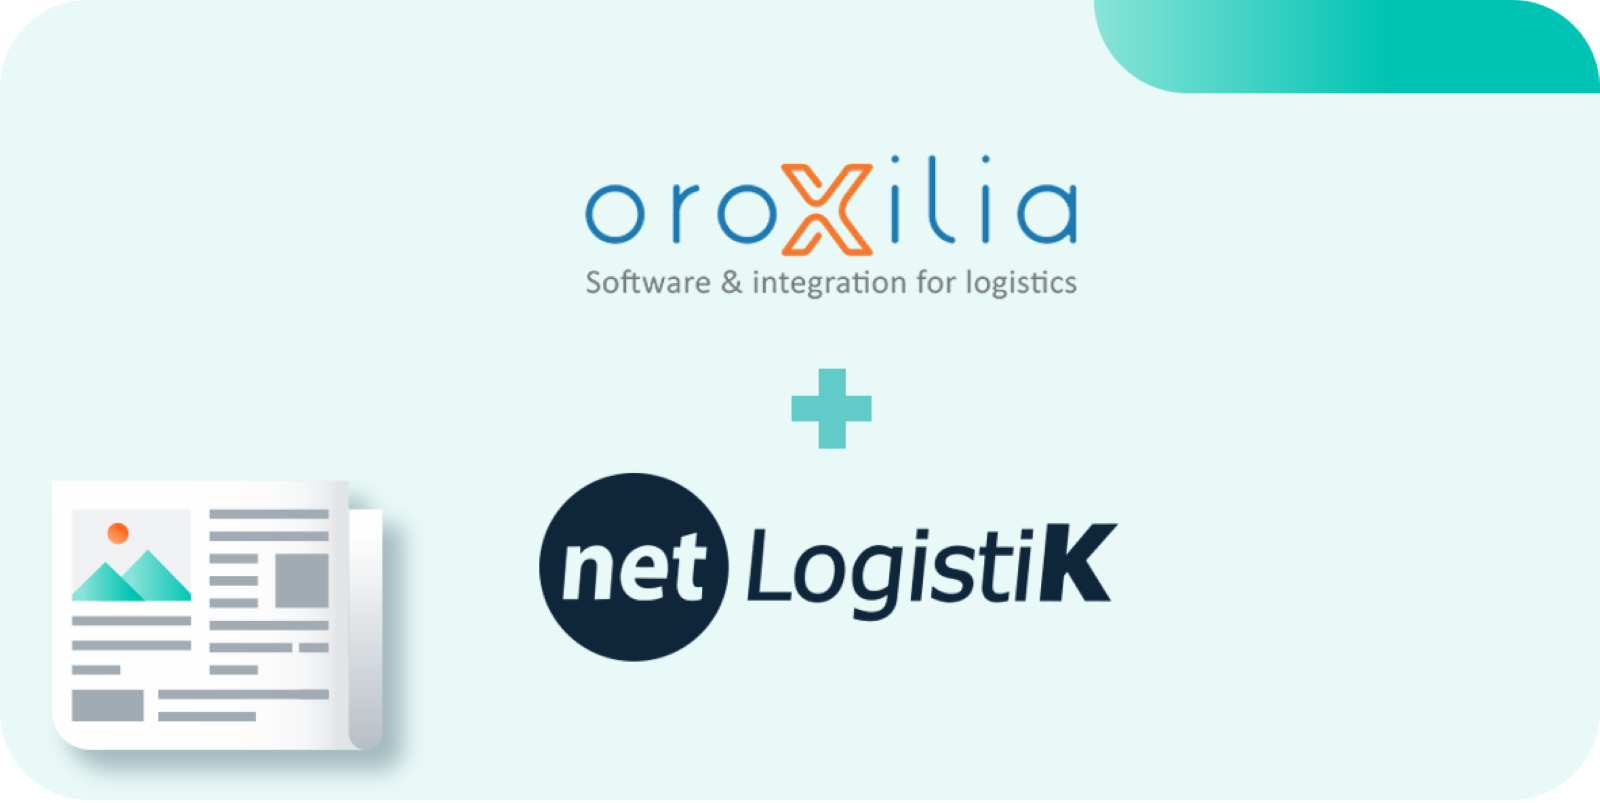 Netlogistik y Oroxilia anuncian asociación estratégica